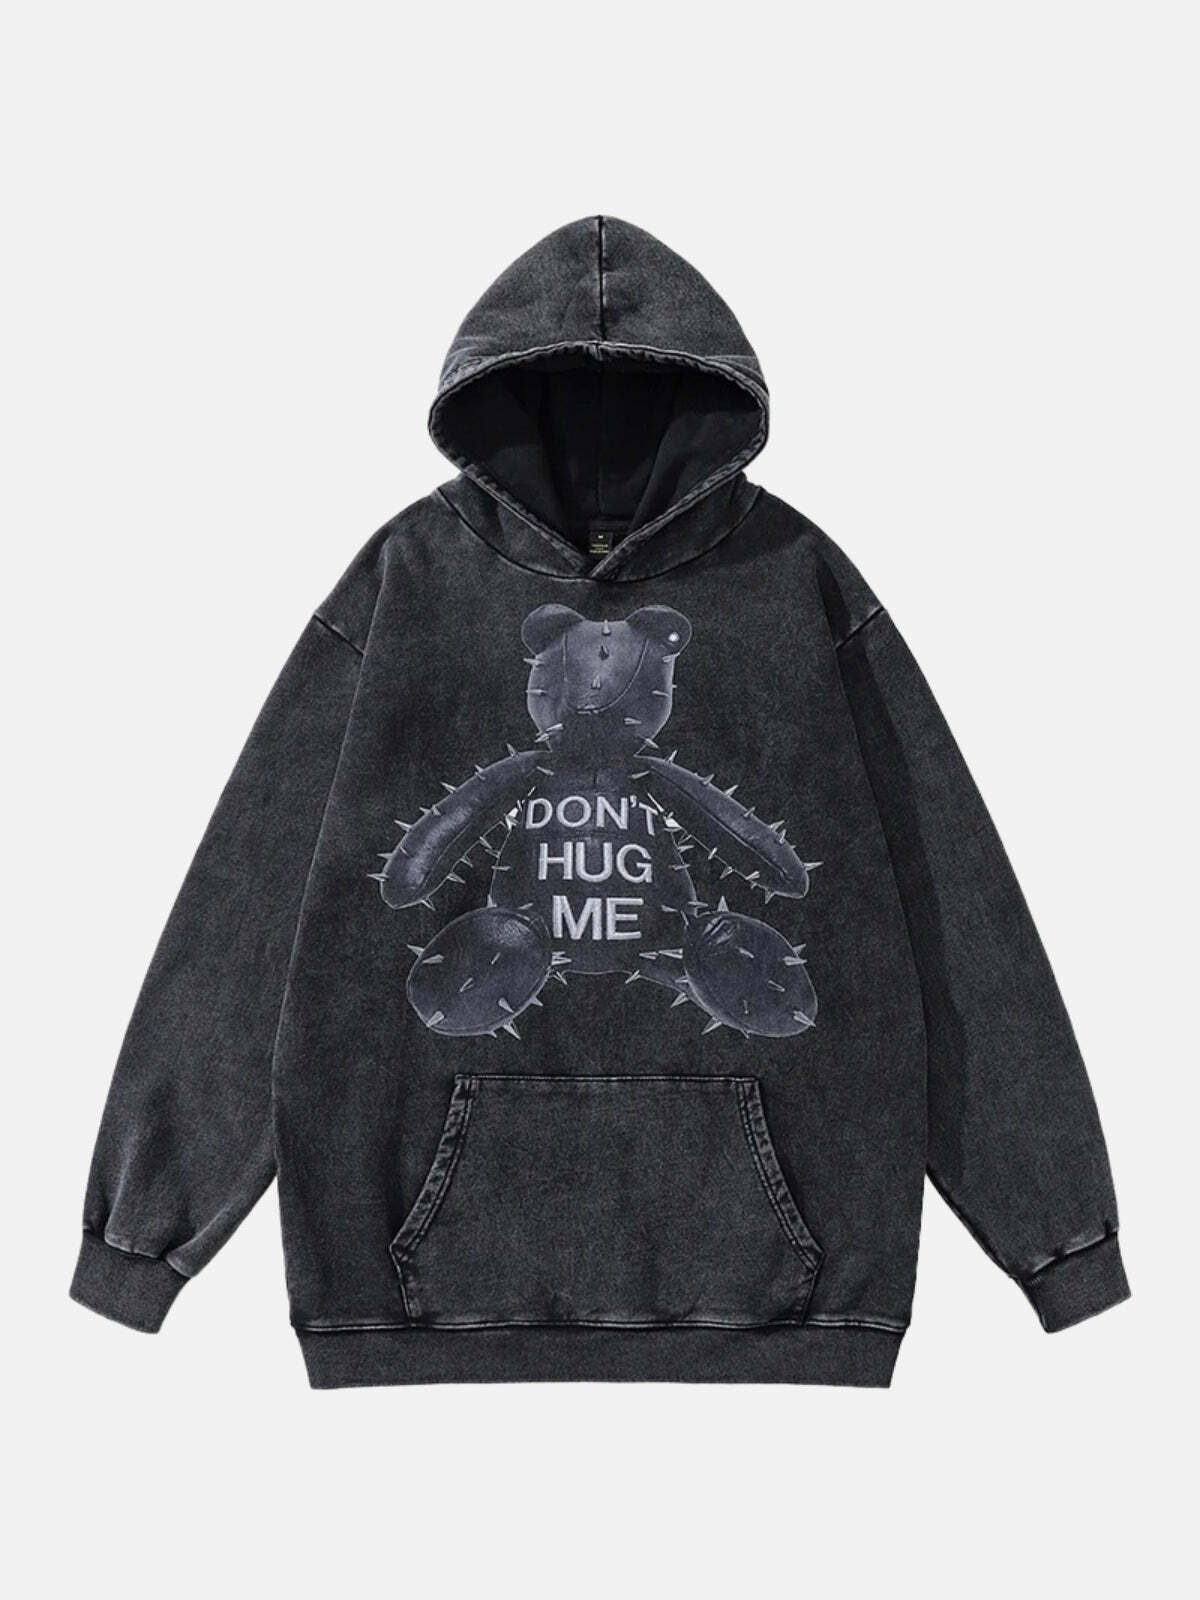 ironic bear hoodie edgy & playful streetwear 4816